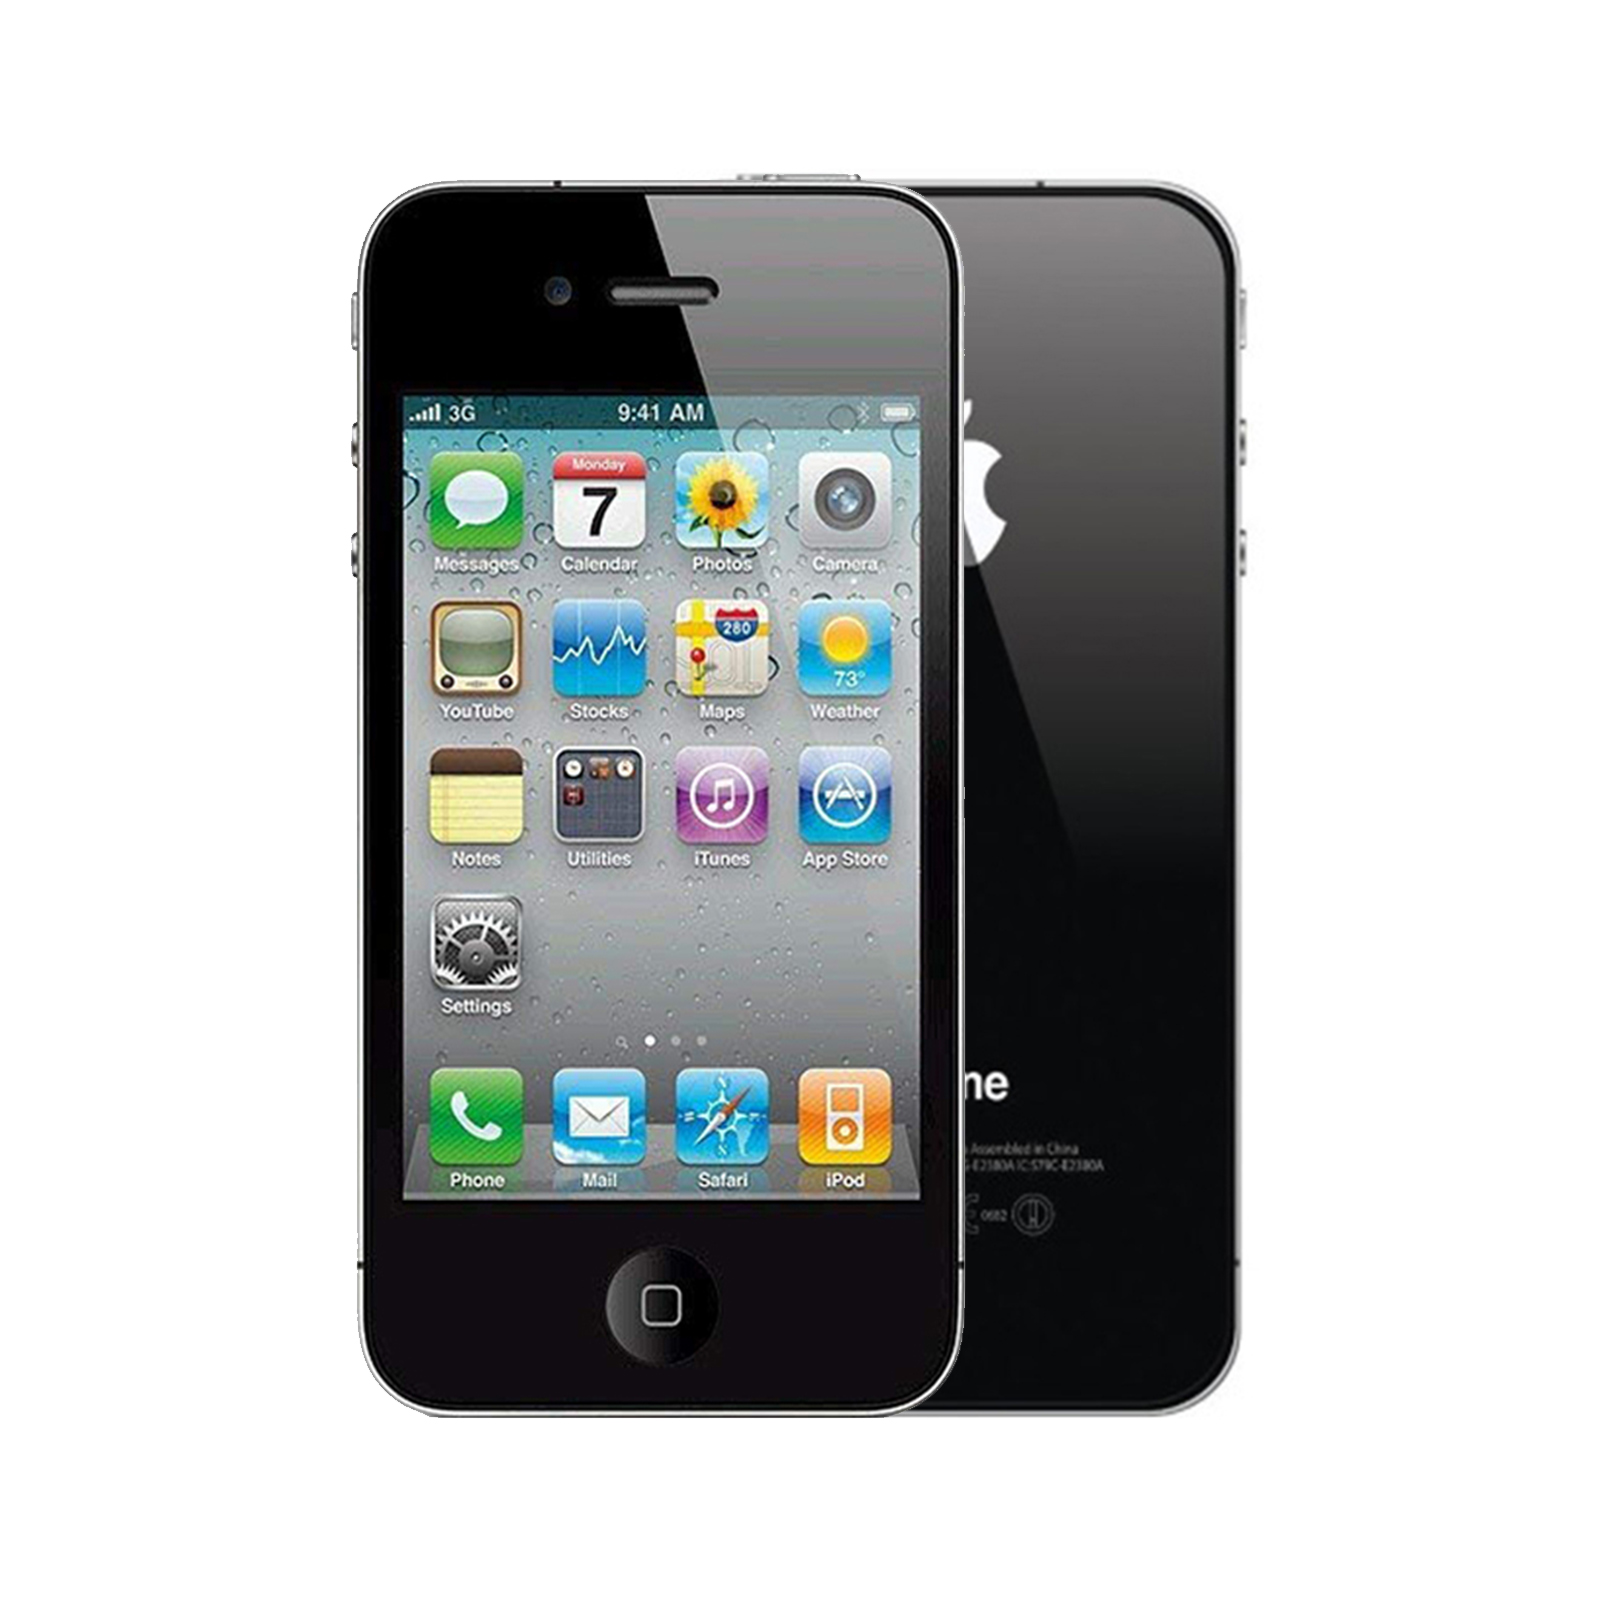 apple iphone 4s 8gb black